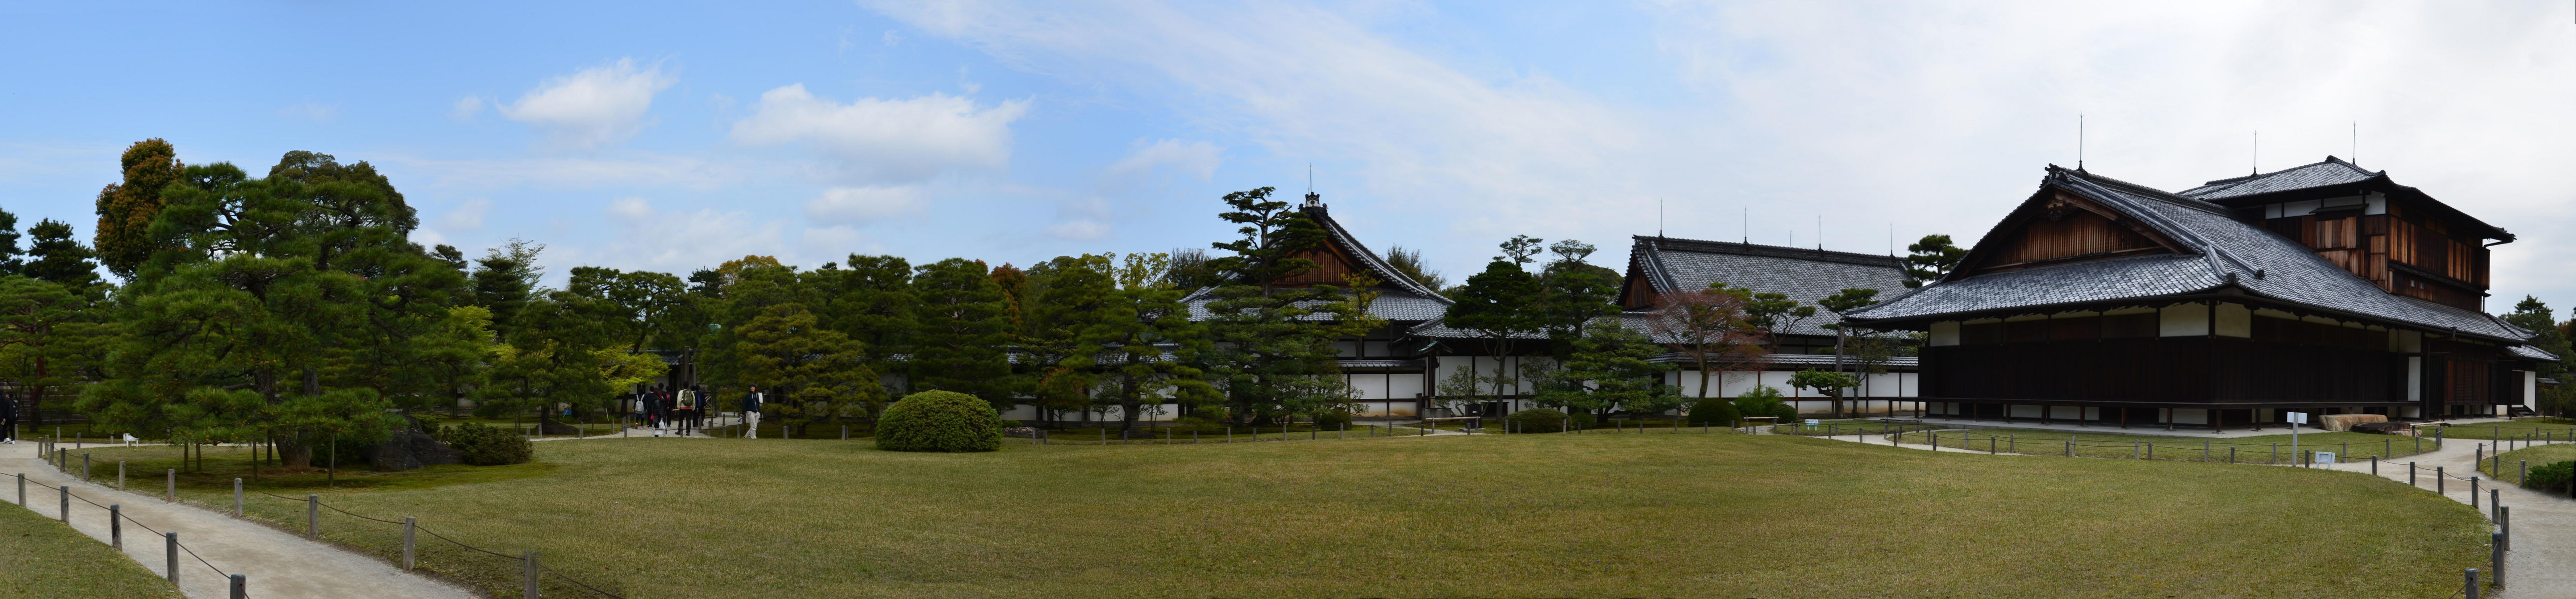 Nijo castle garden - Kyoto - Japan3.jpg